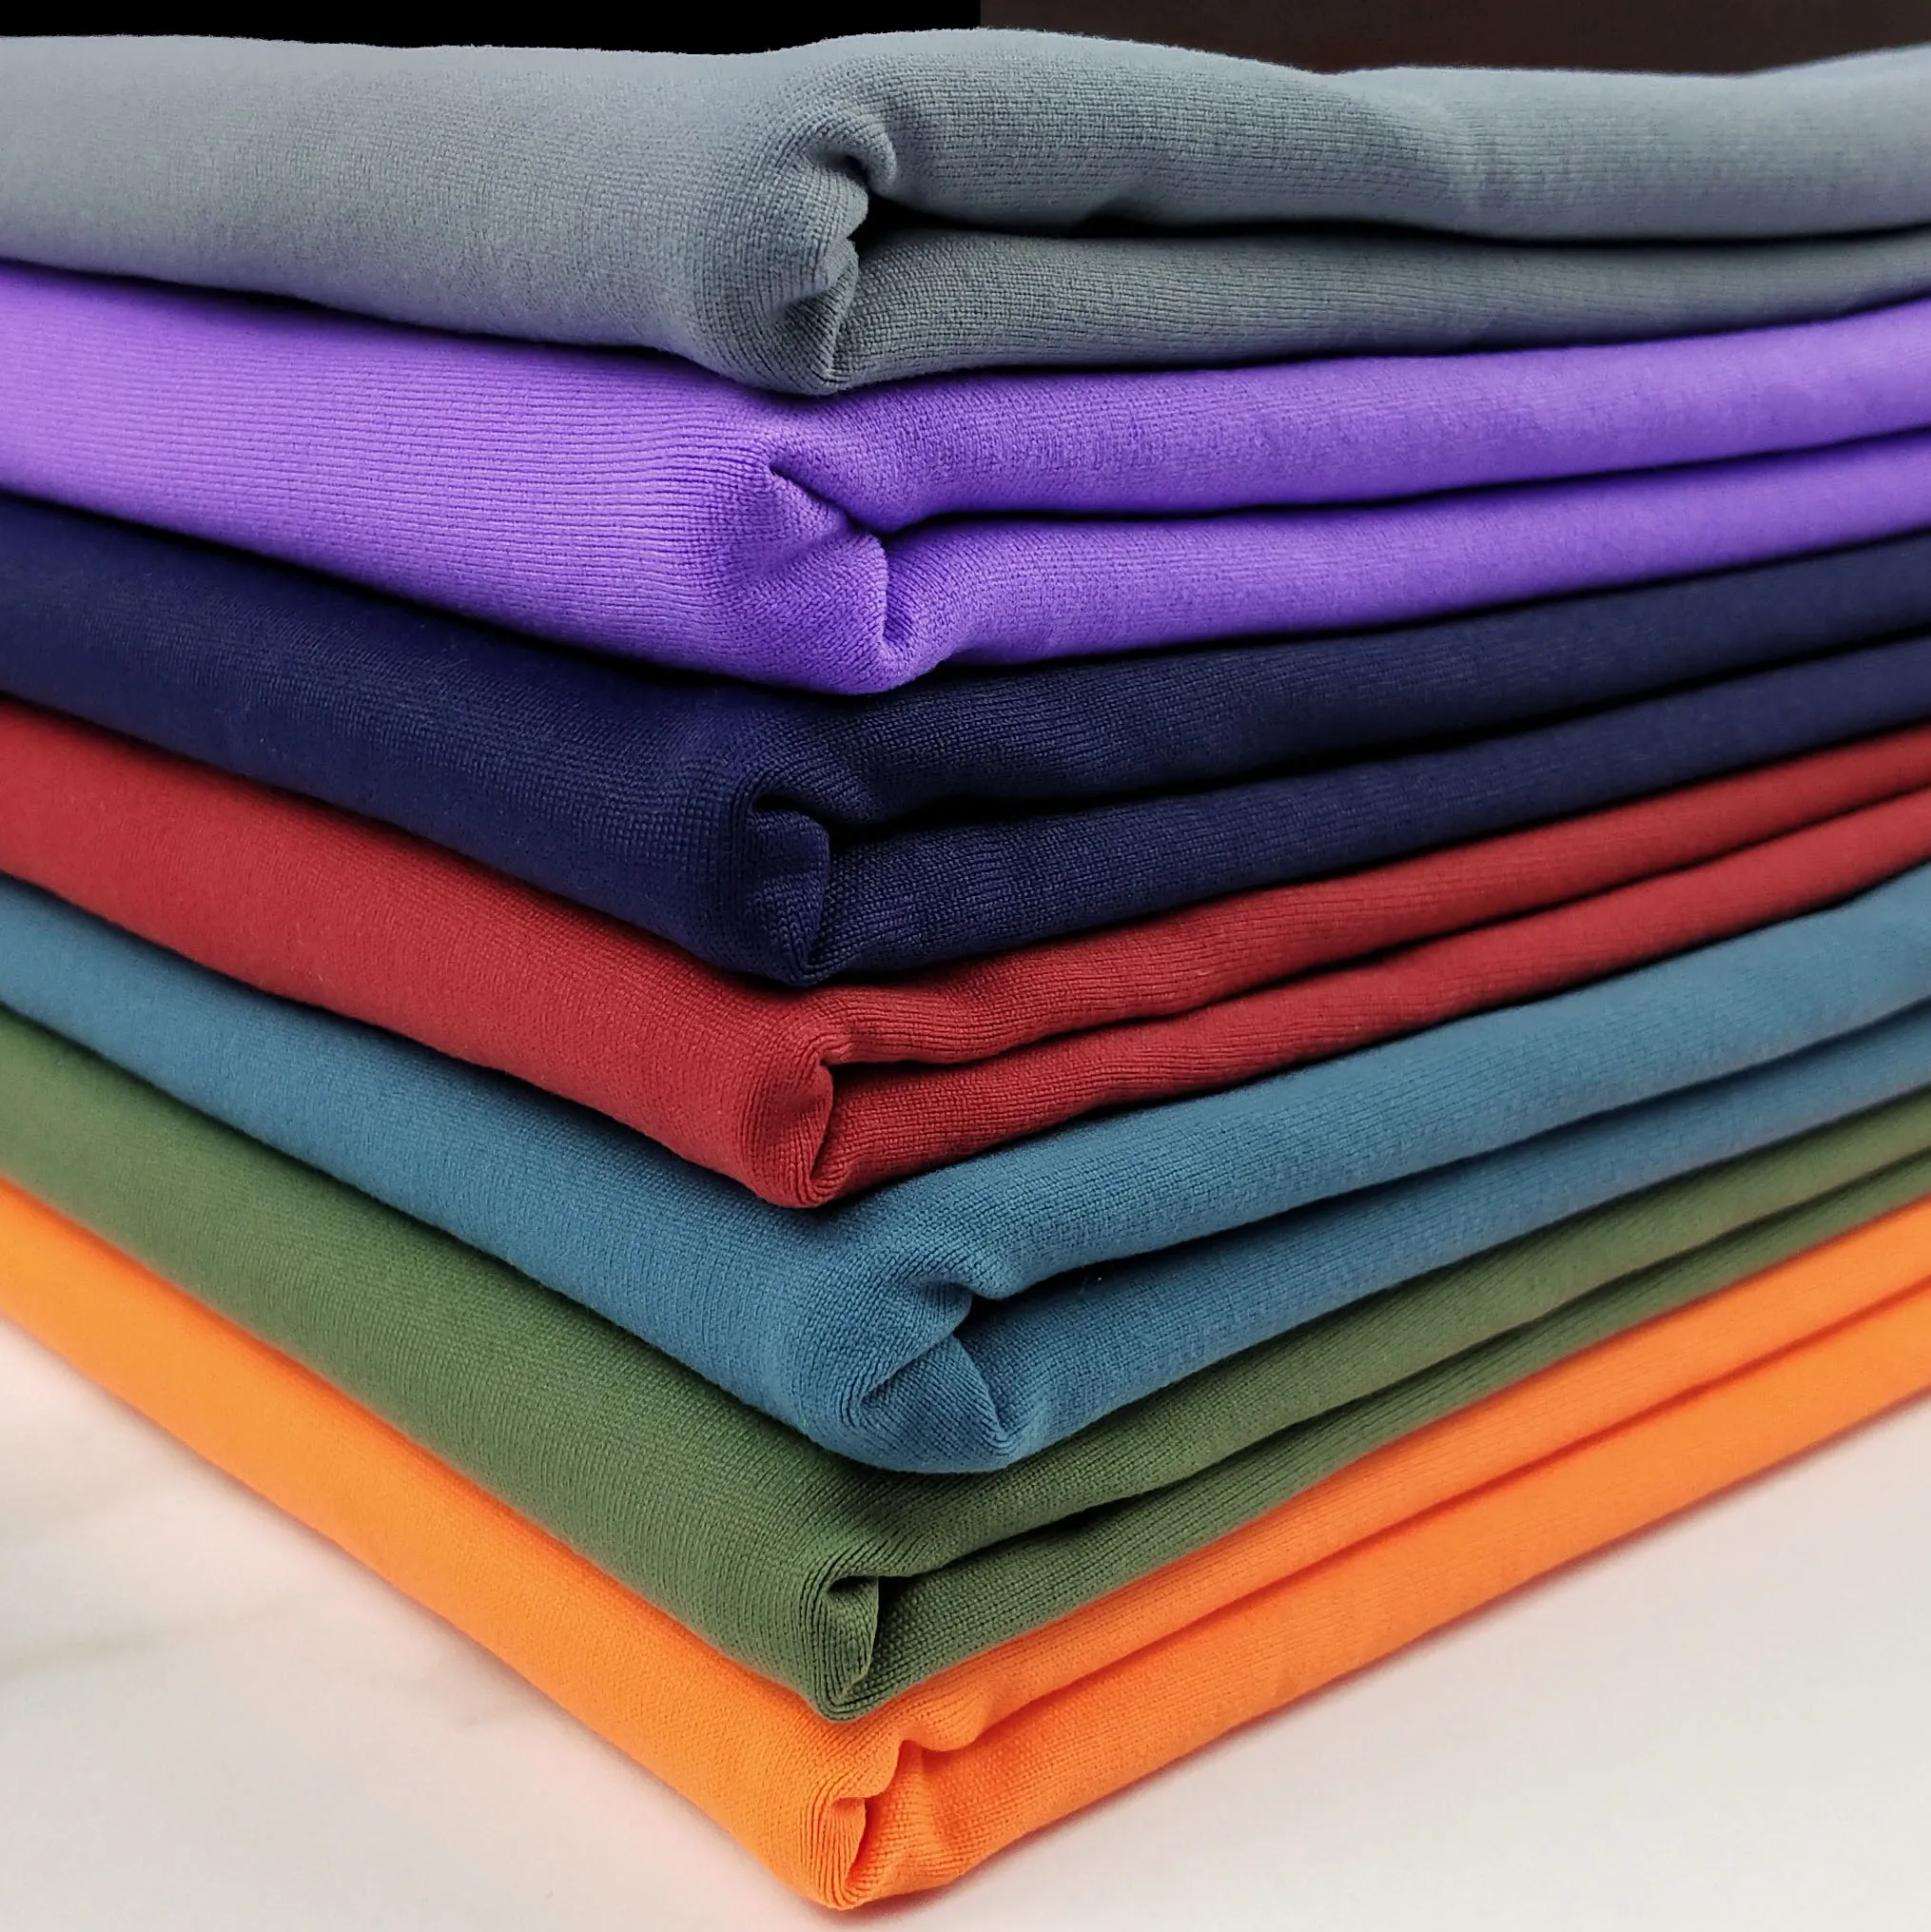 4 Colors Stretch Knit Lycra Fabric Polyester Spandex Jacquard